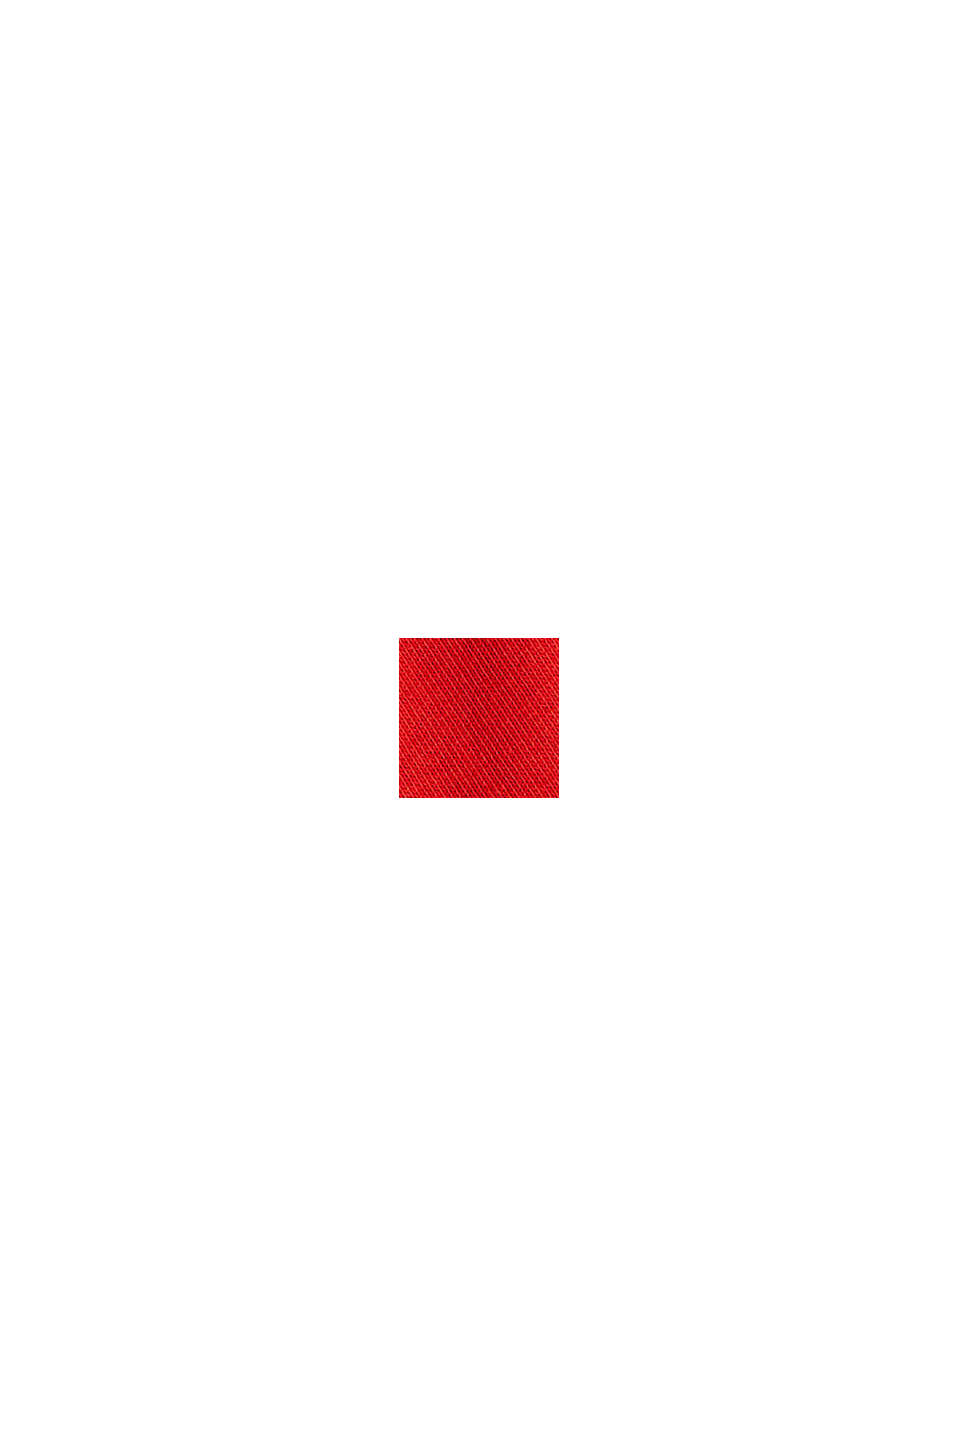 Logokirjailtu collegepaita puuvillasekoitetta, ORANGE RED, swatch